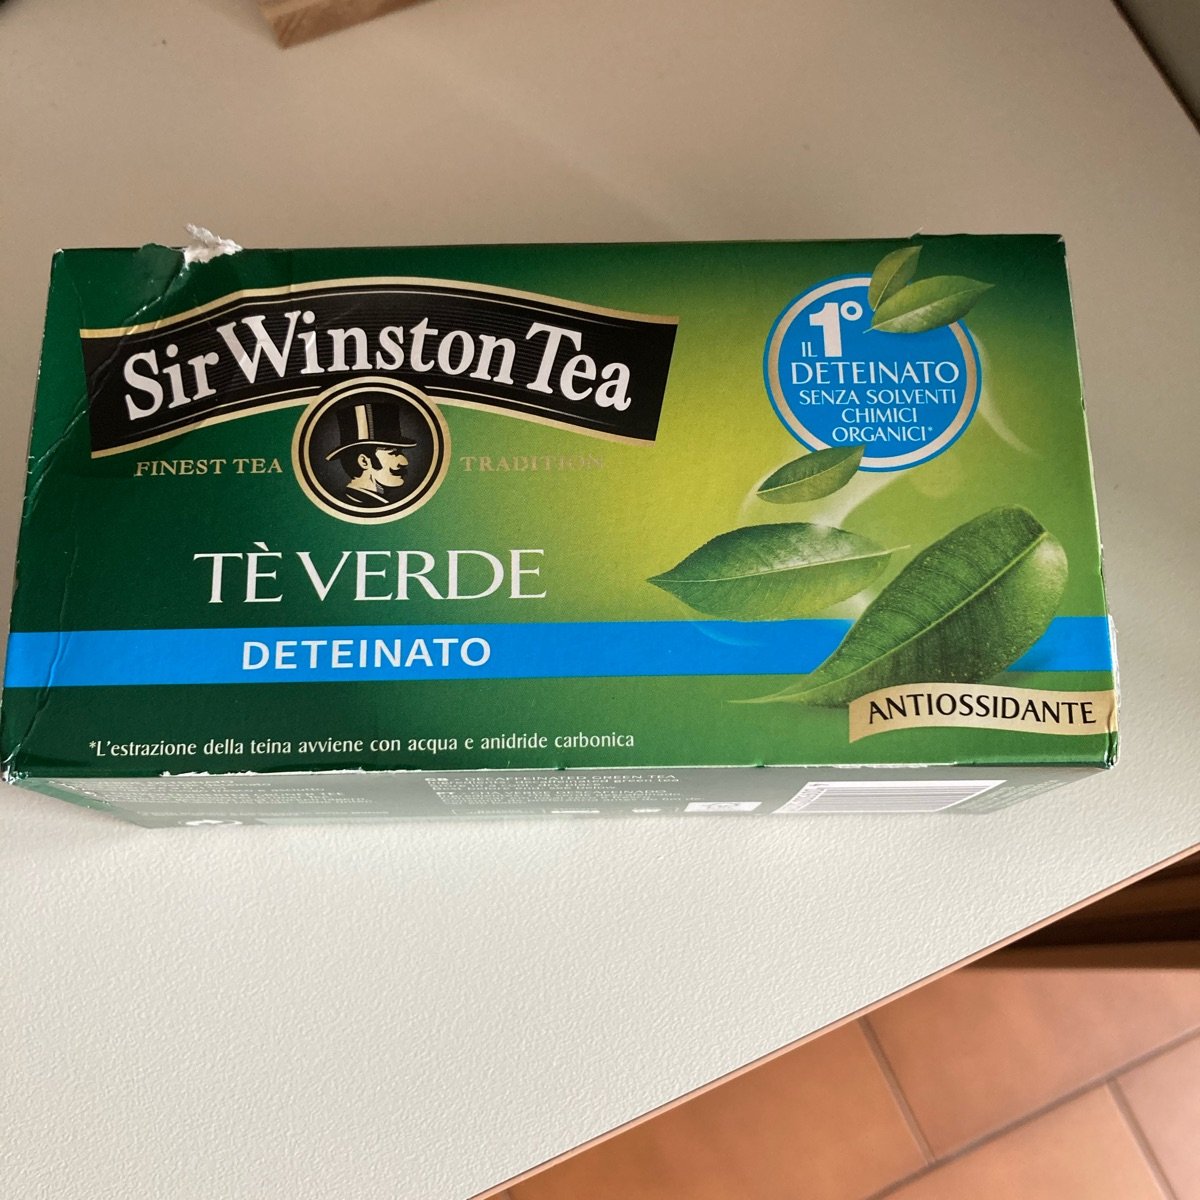 Sir Winston Tea Te verde deteinato Review